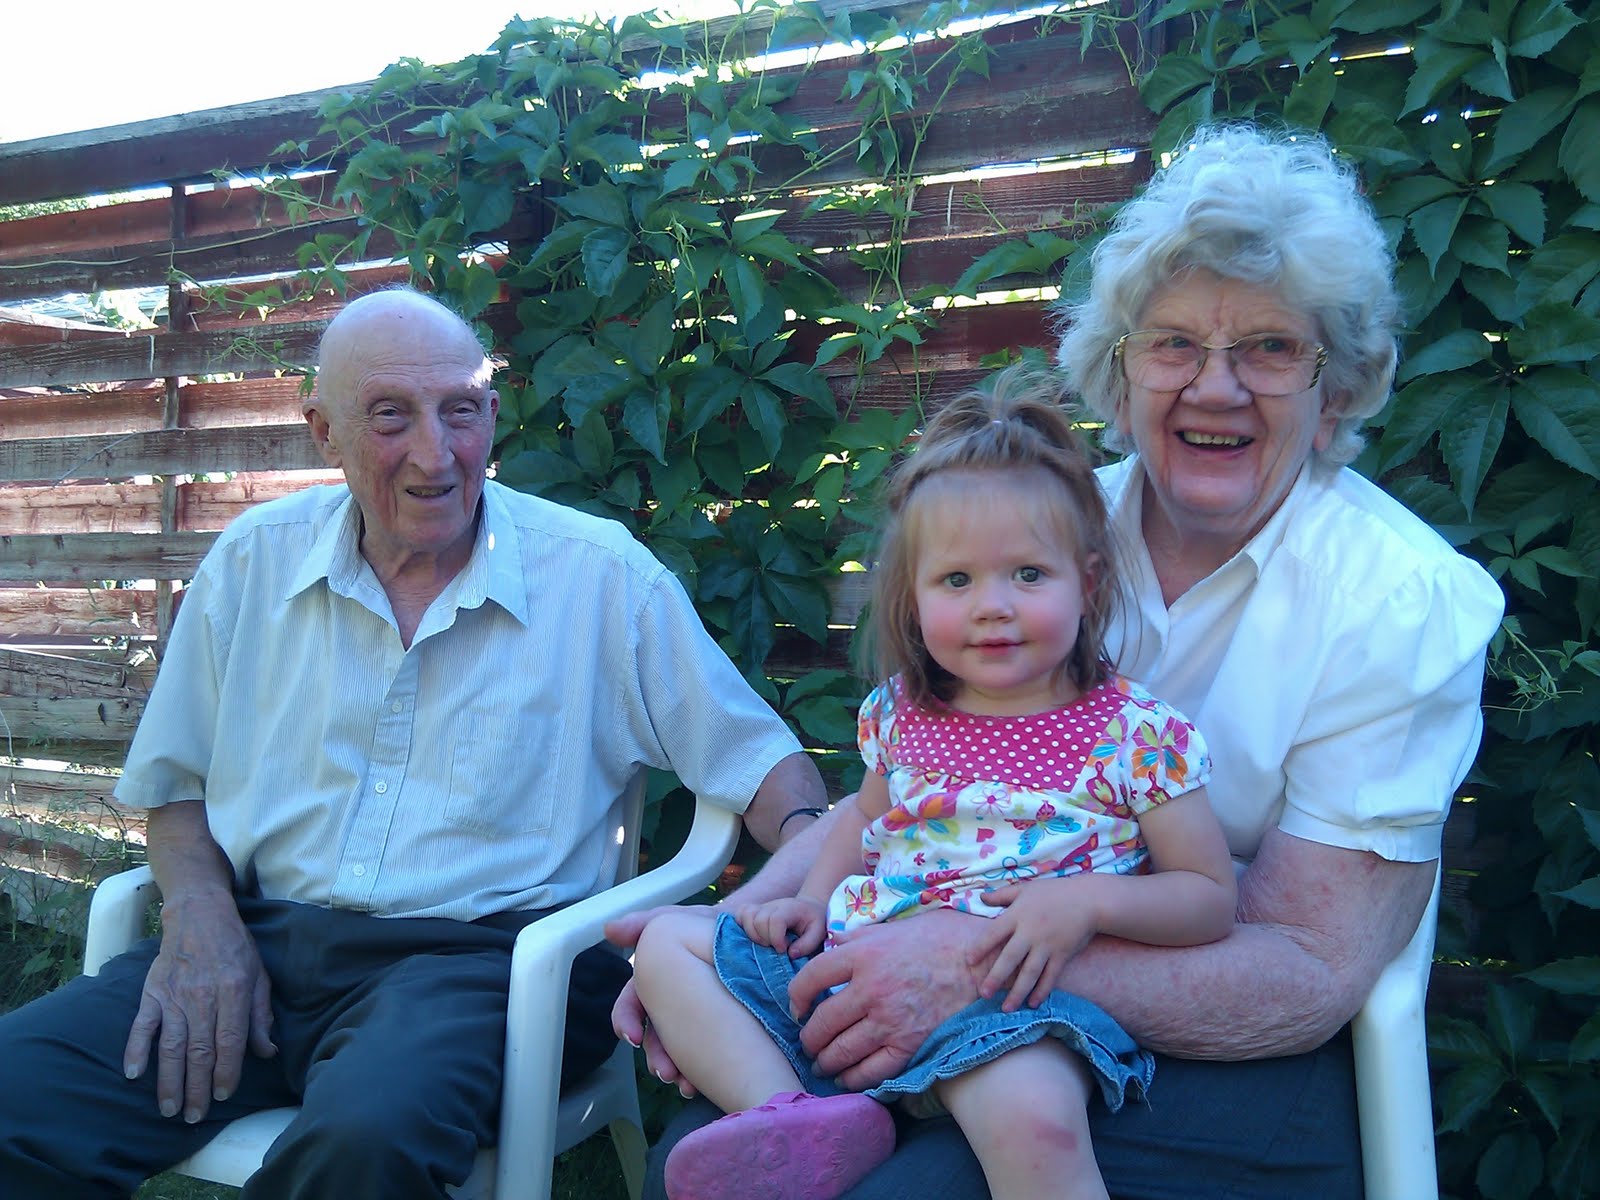 the visit grandma and grandpa